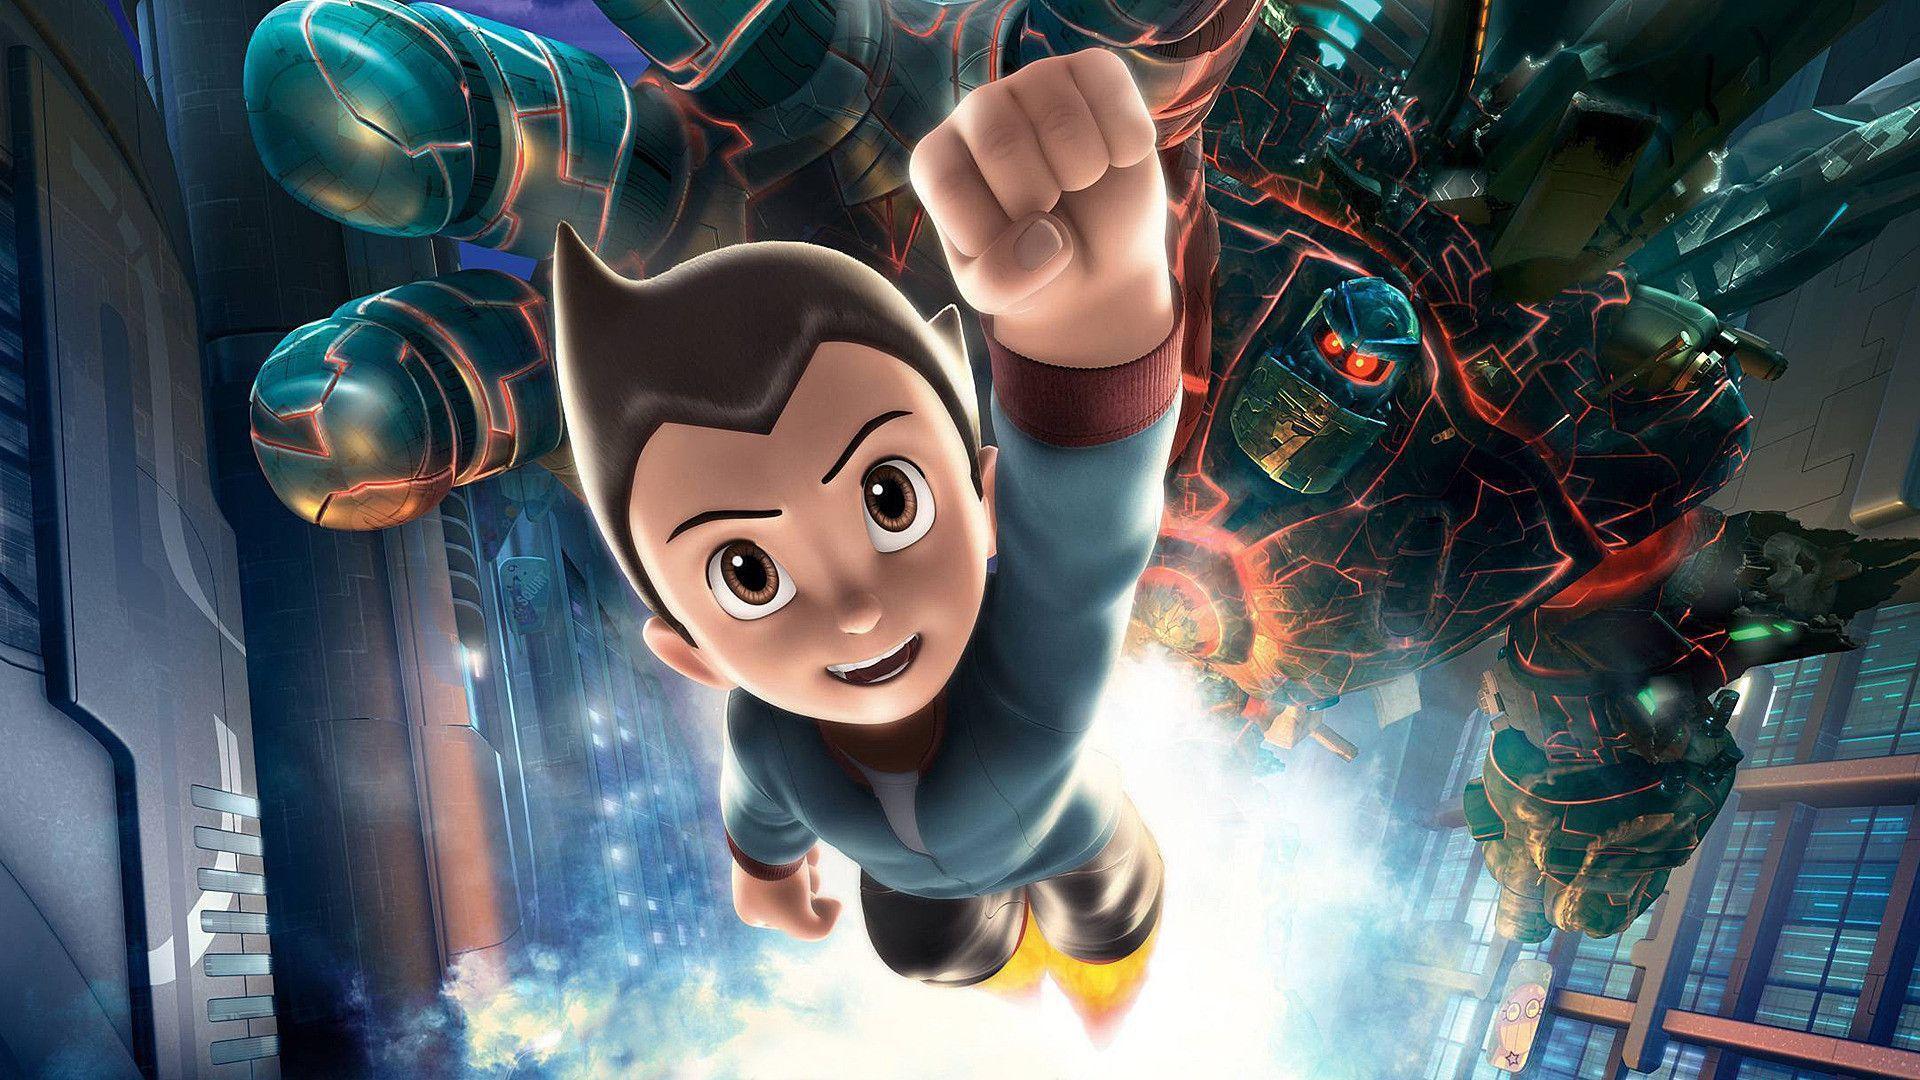 gaming superheroes Not DC or Marvel - Astro Boy - Astro Boy